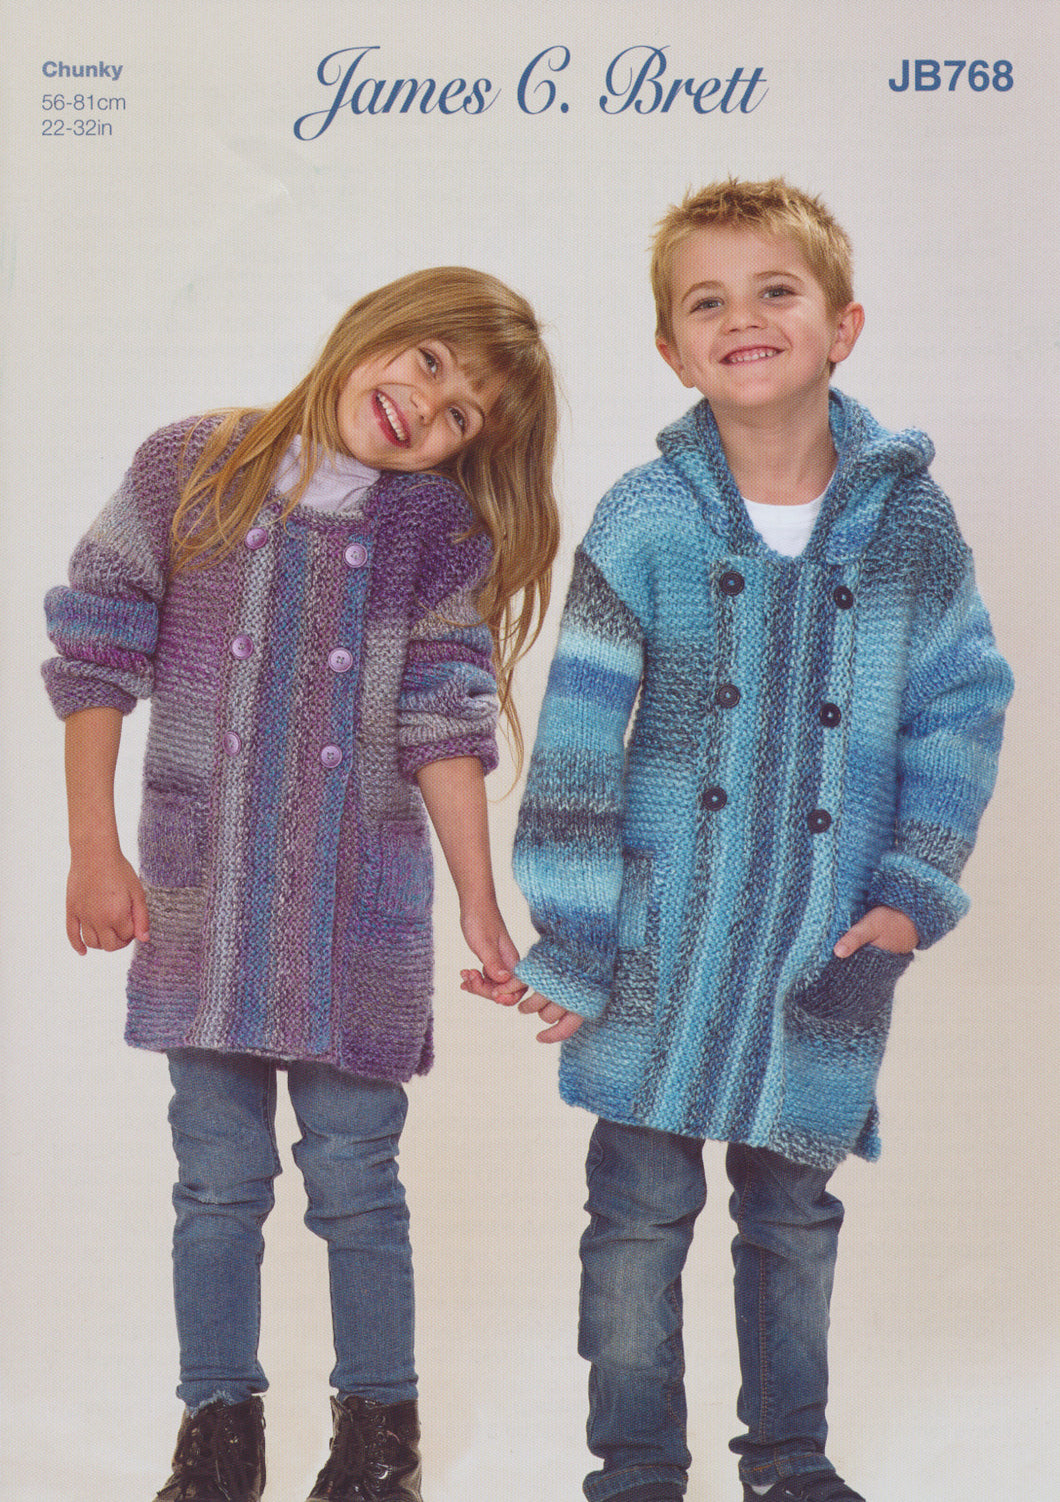 James Brett Chunky Knitting Pattern - Childrens Jackets (JB768)